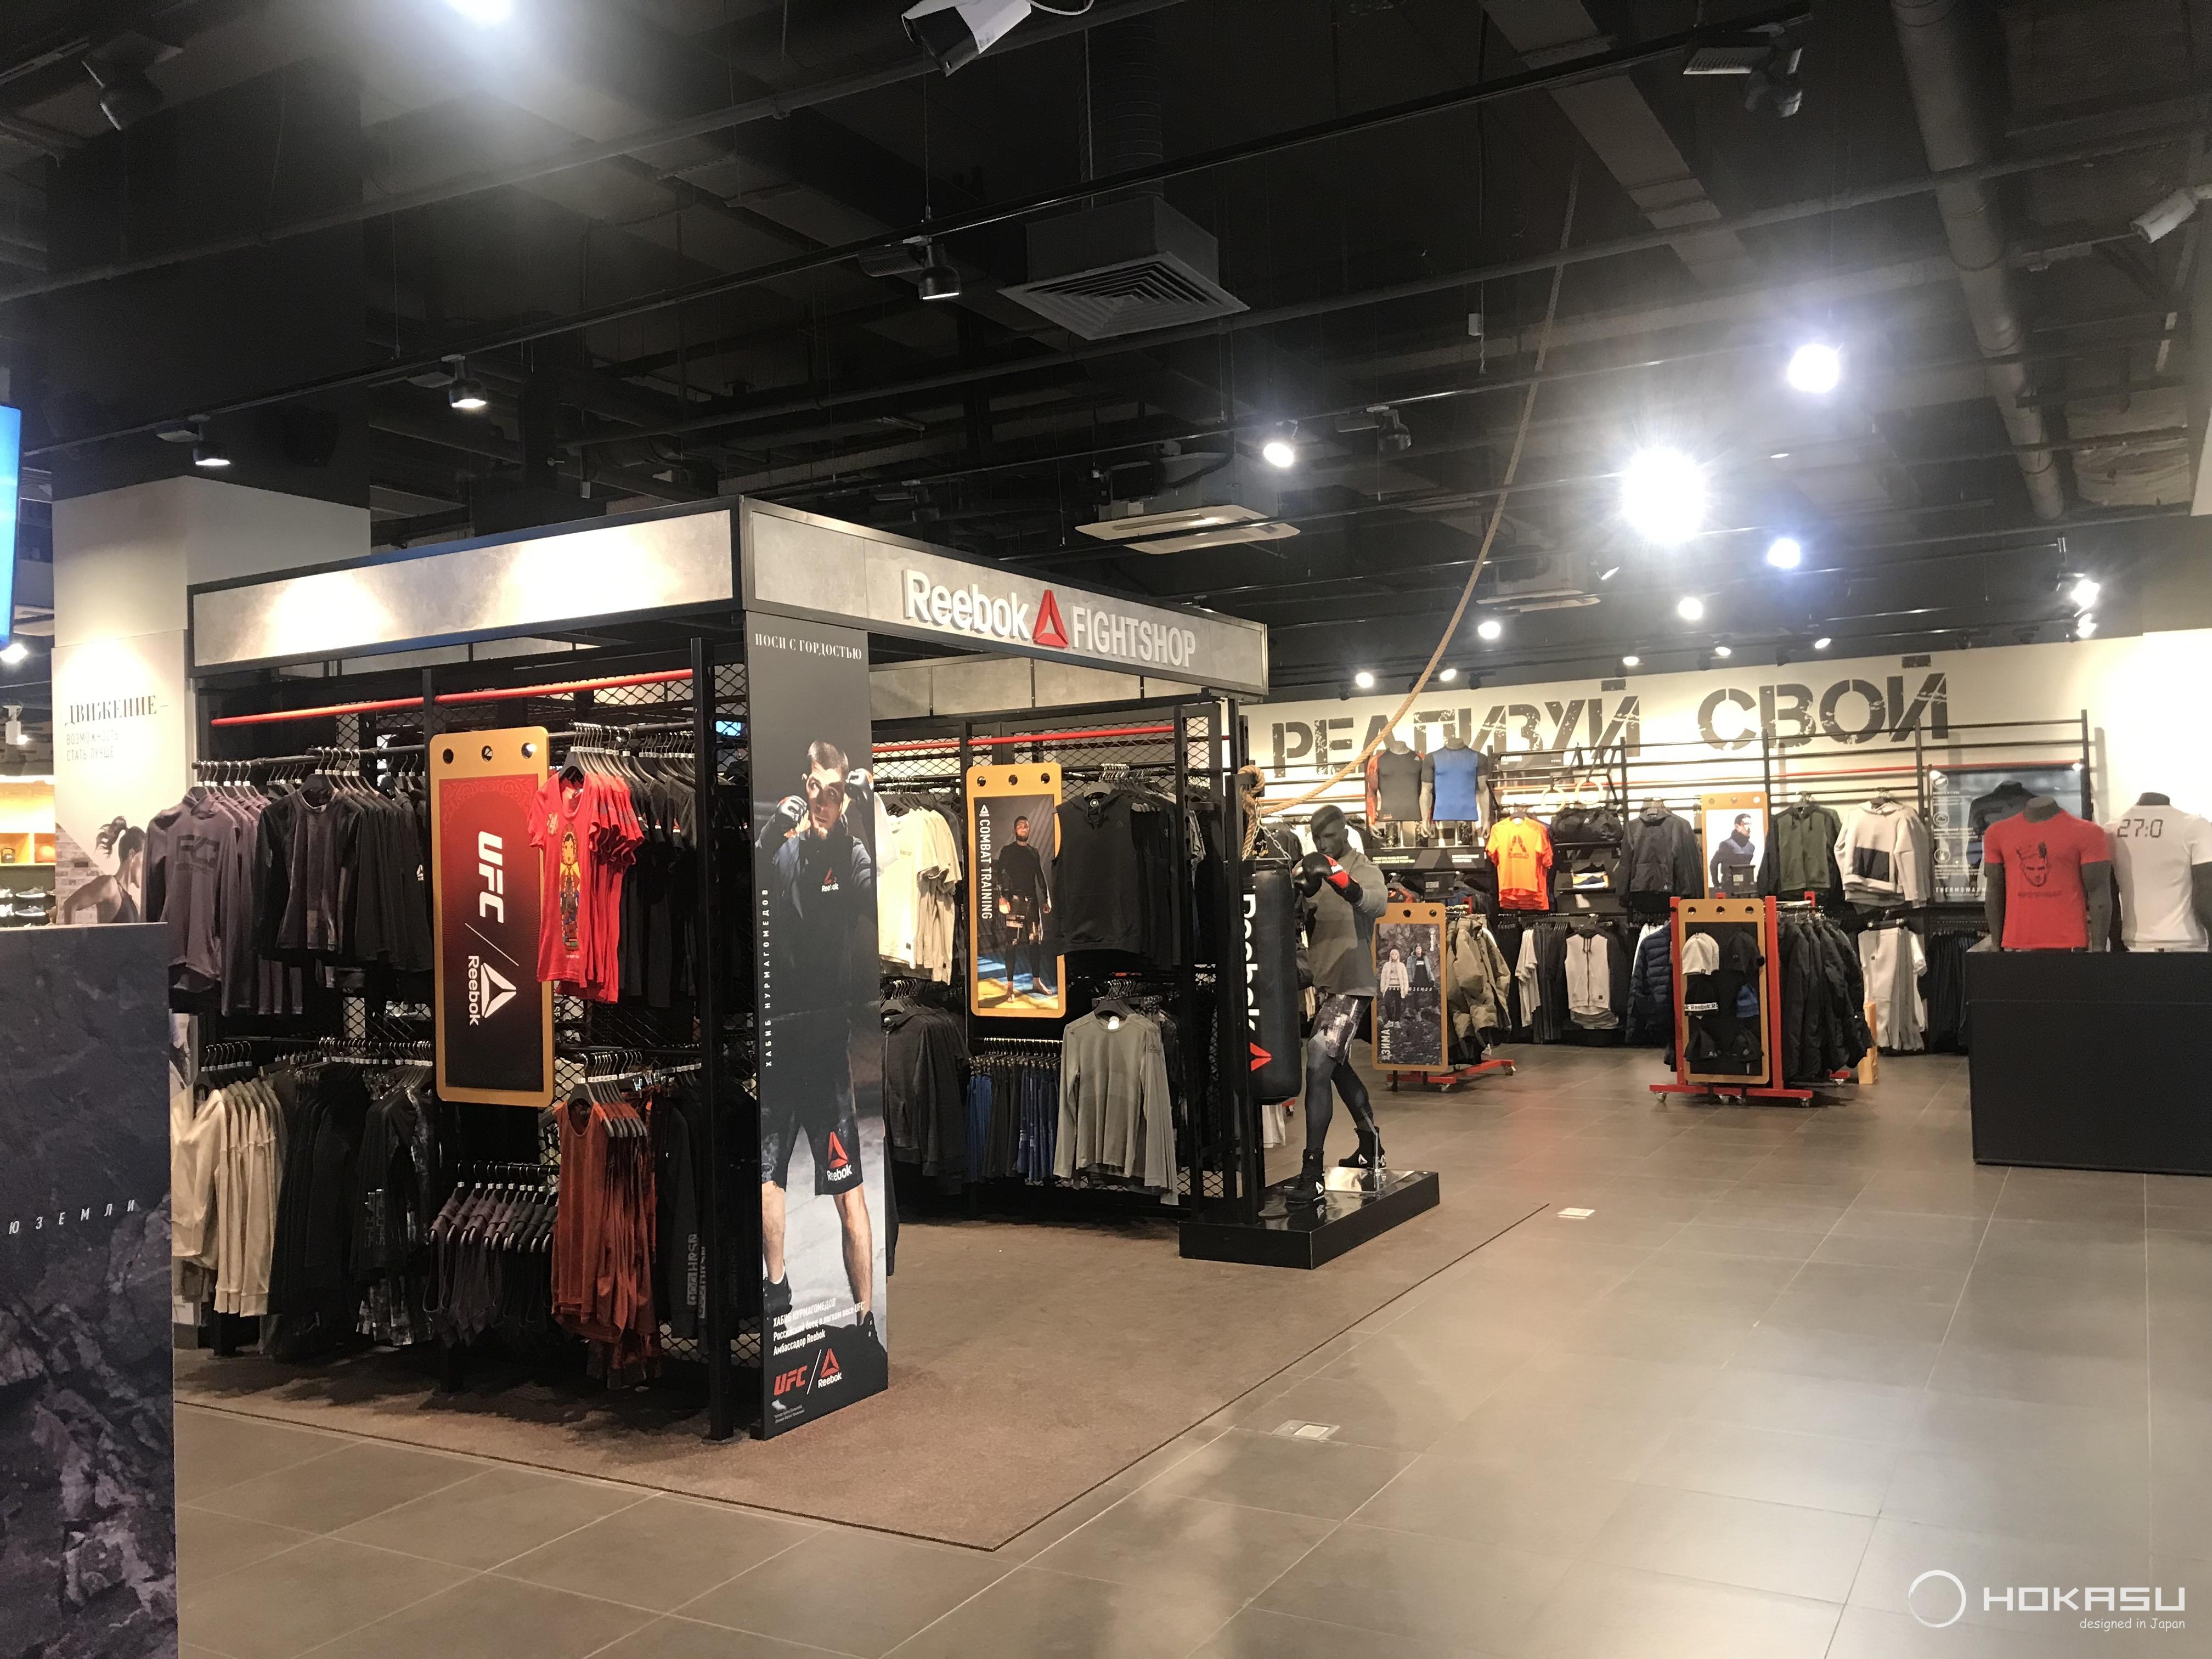 Reebok brand store in the Metropolis shopping mall – HOKASU Lighting project